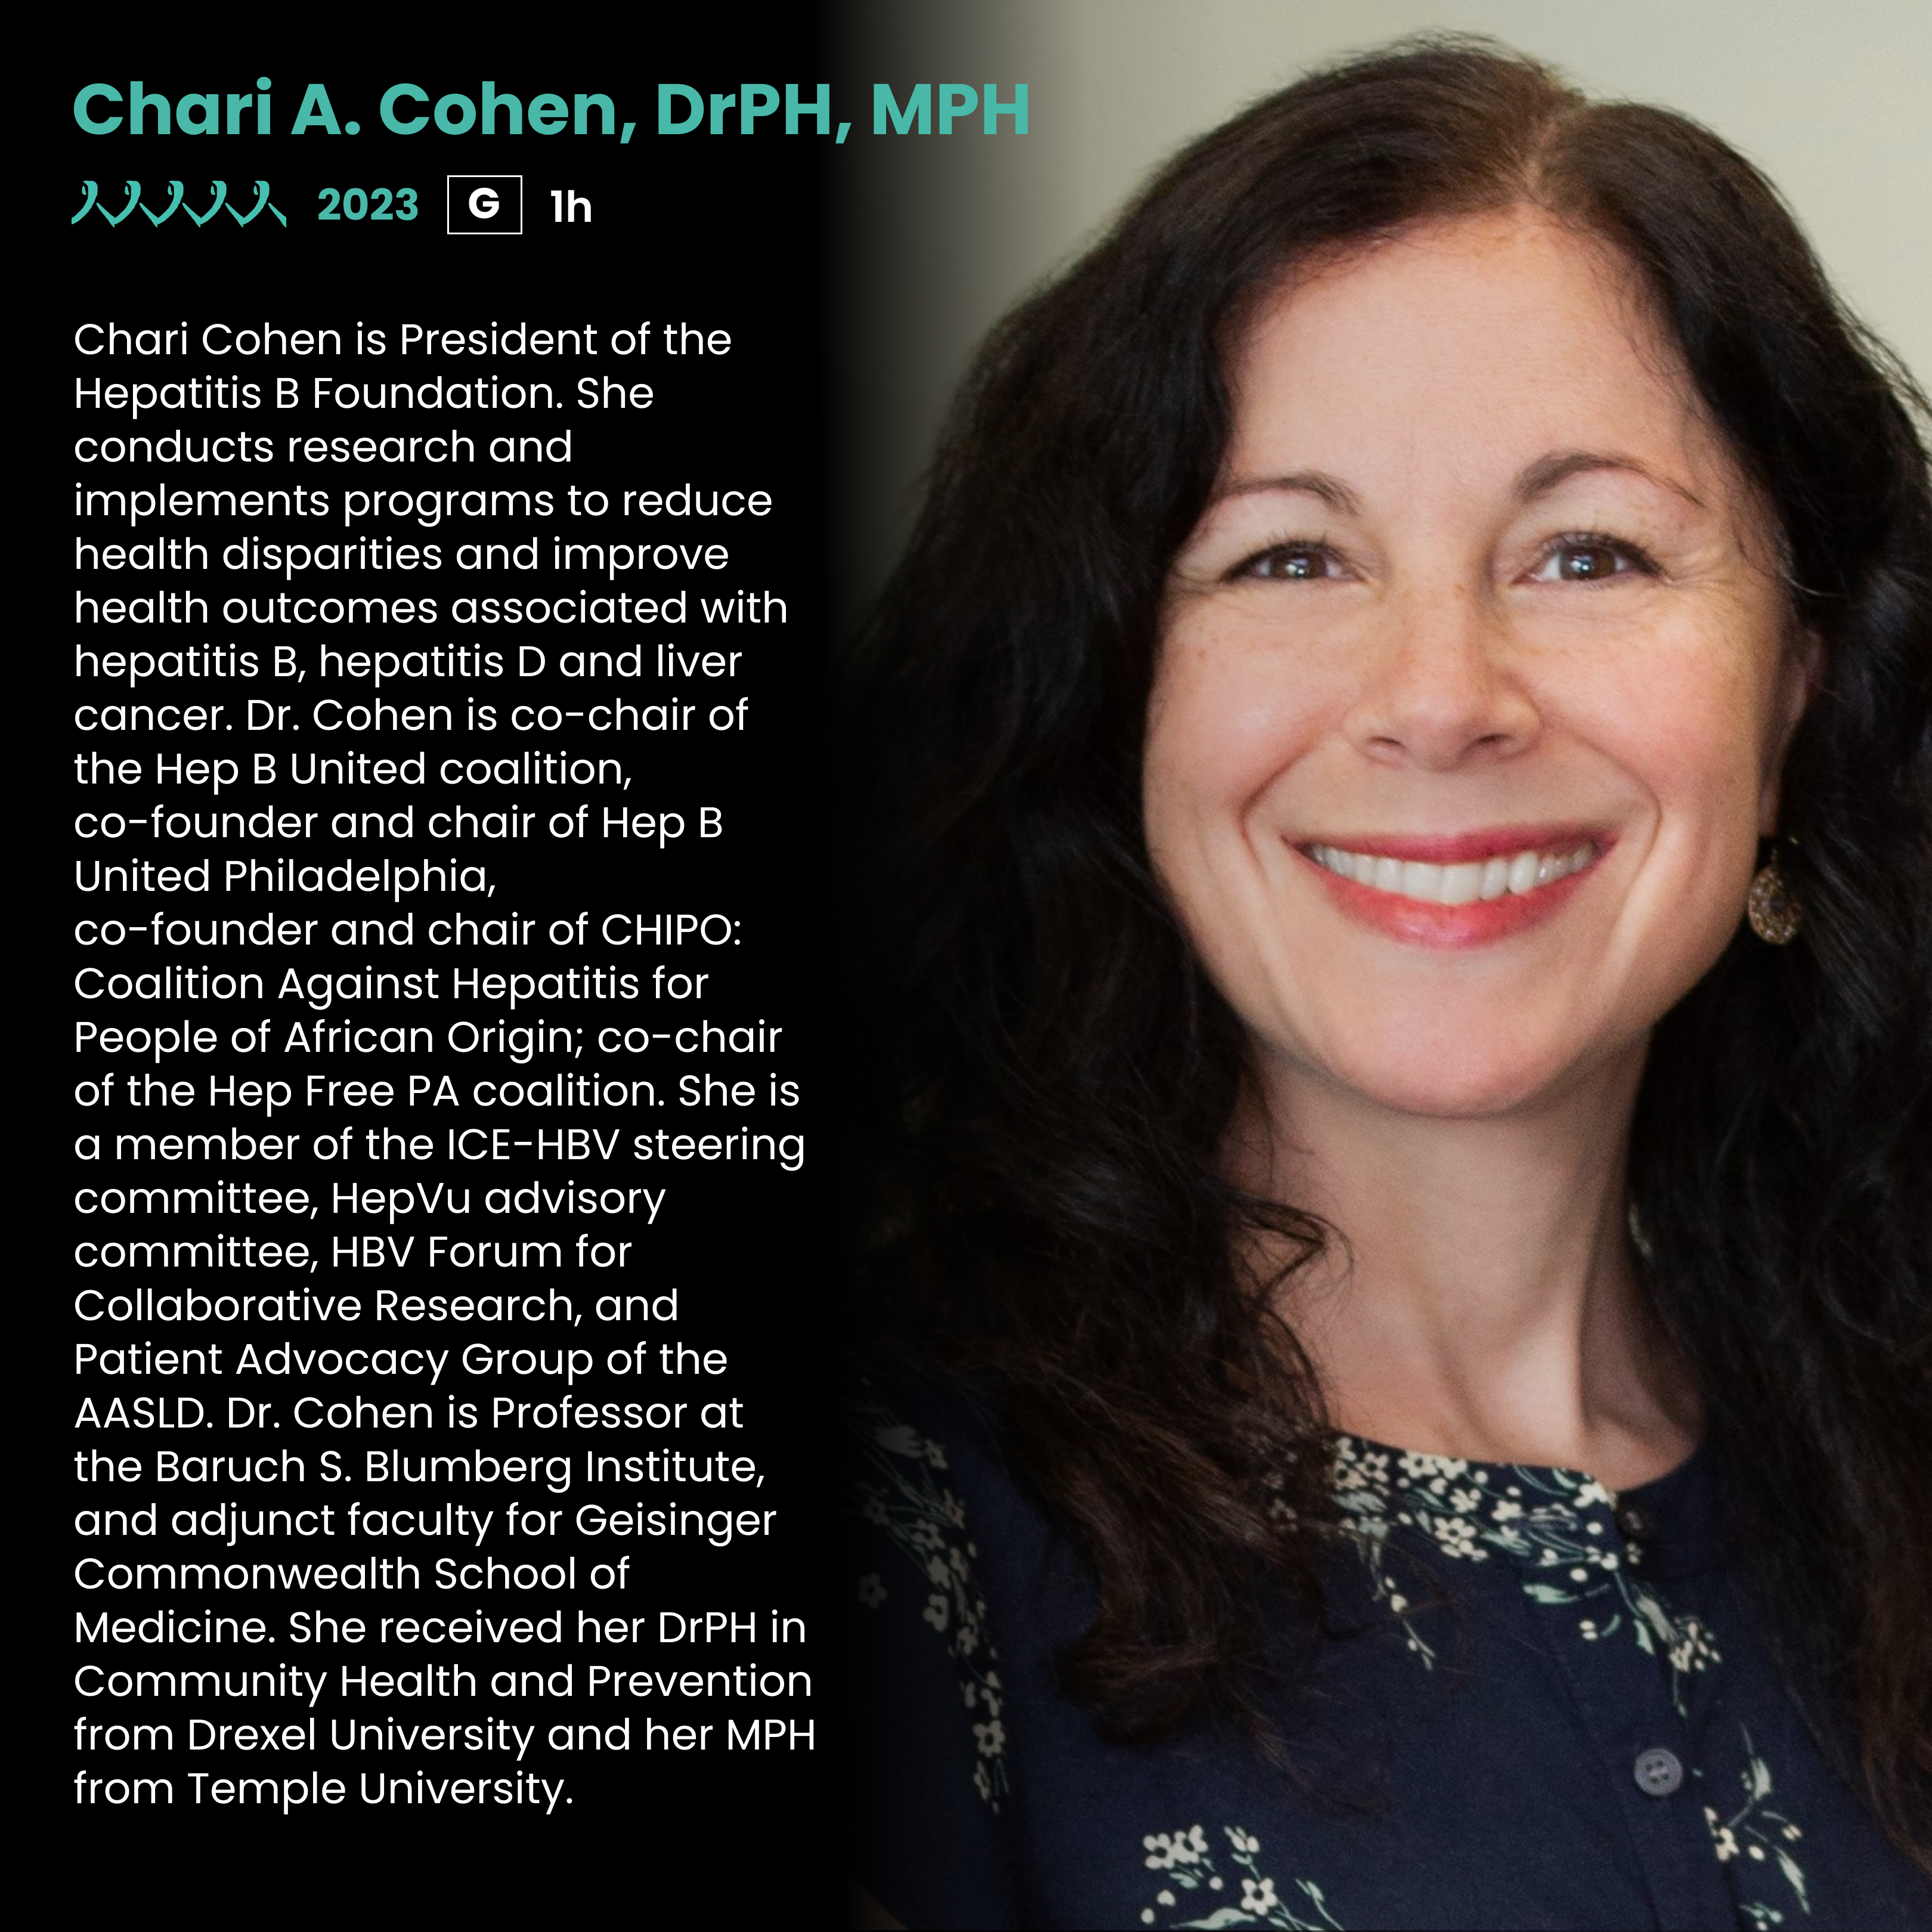 Chari Cohen, DrPH, MPH 3s